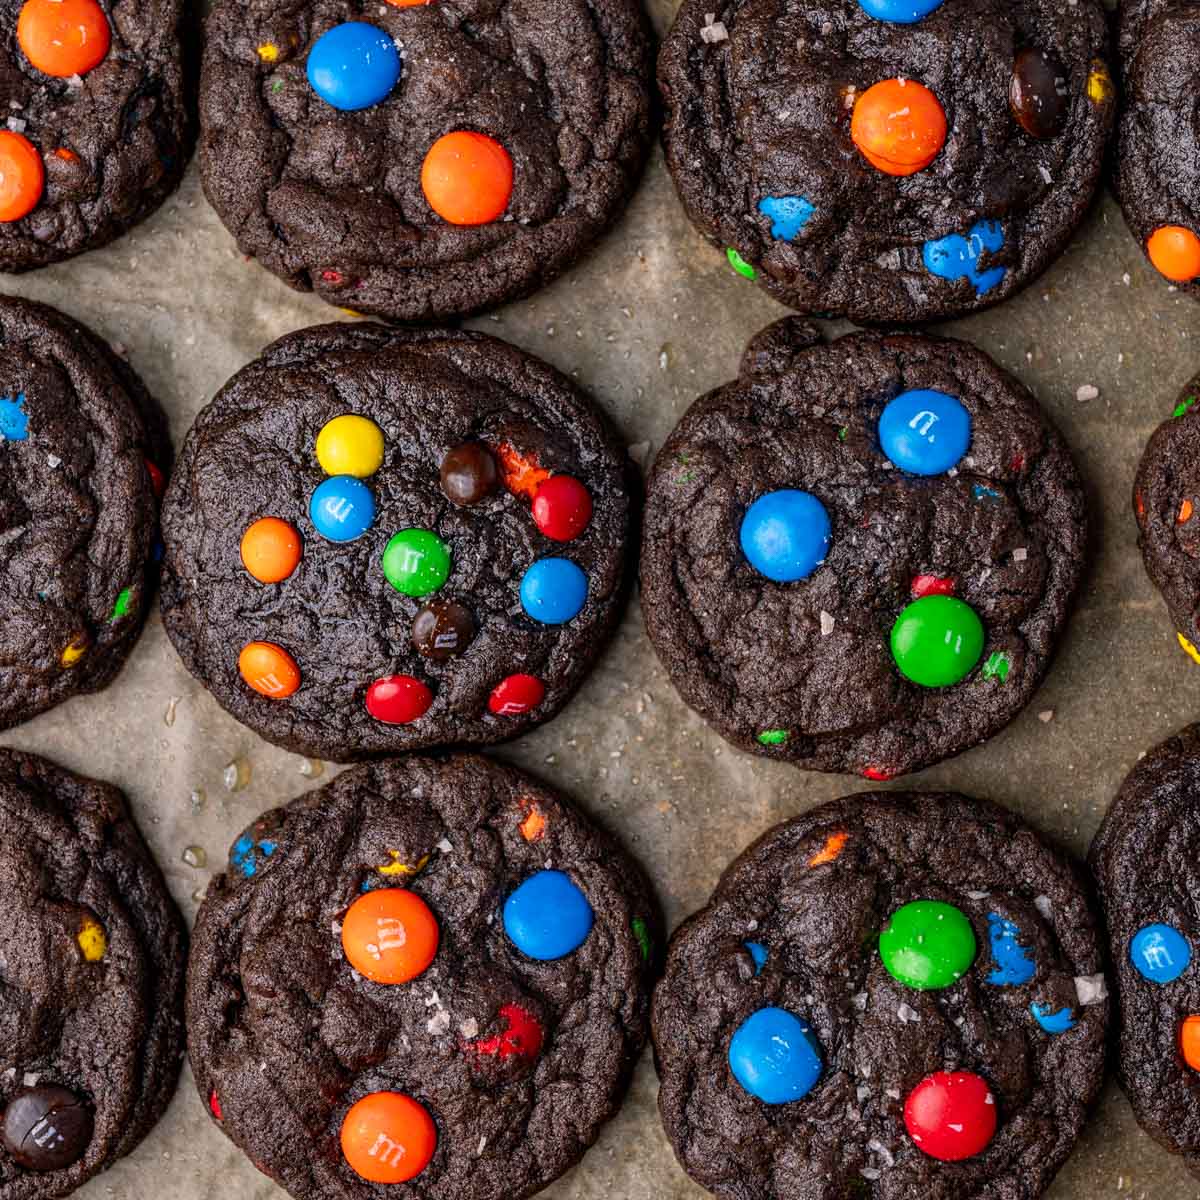 Soft M&M Cookies - Just a Taste